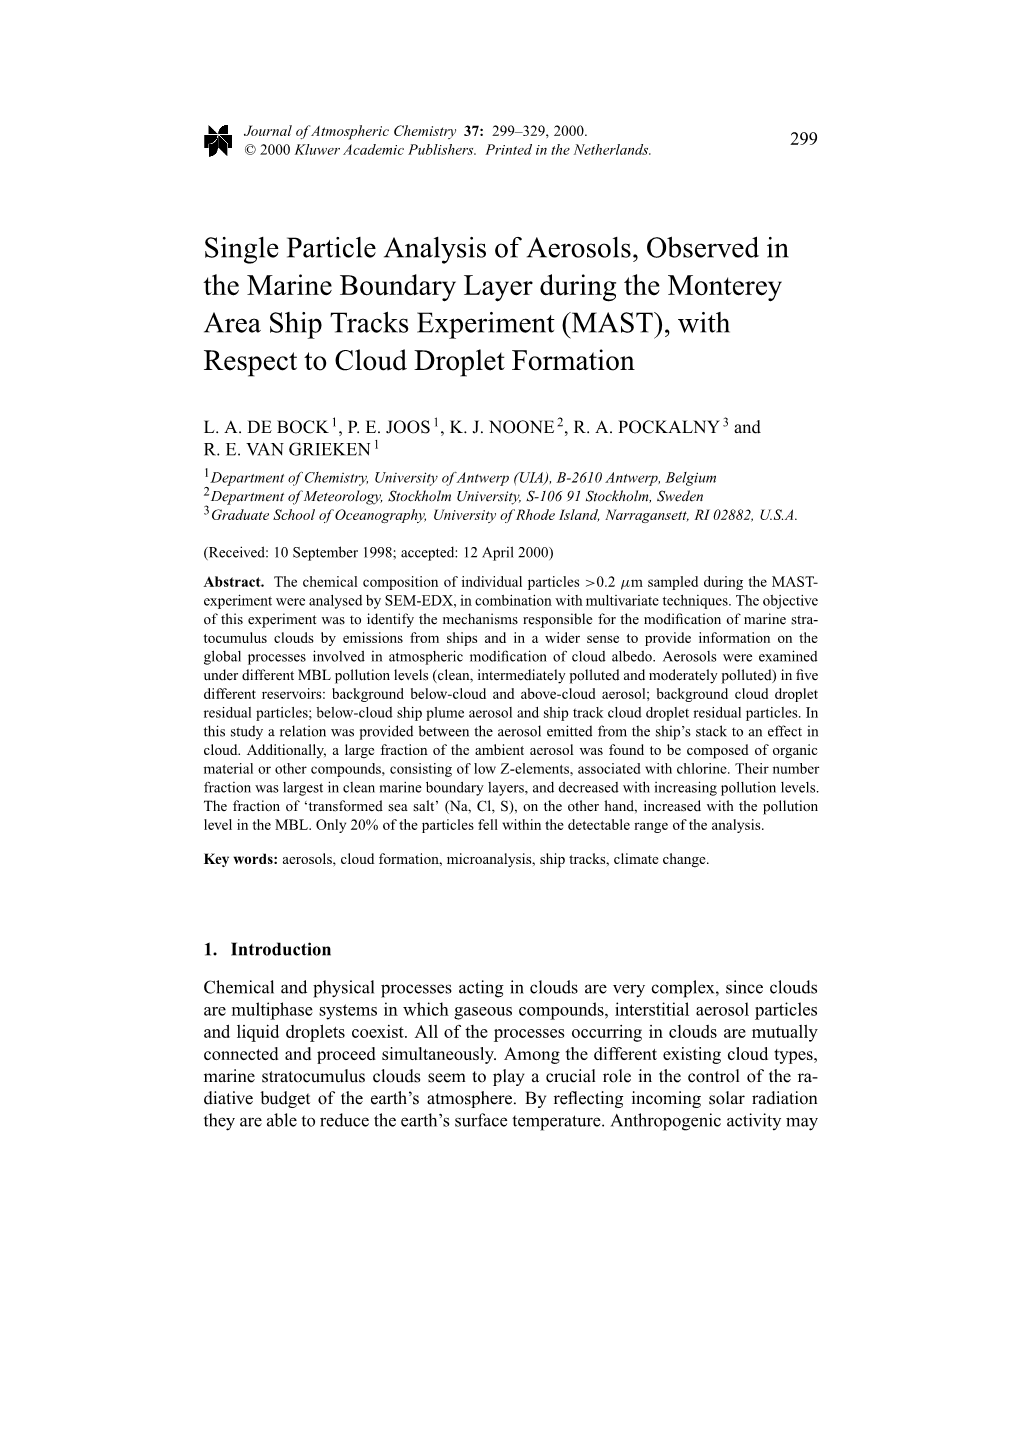 Single Particle Analysis of Aerosols